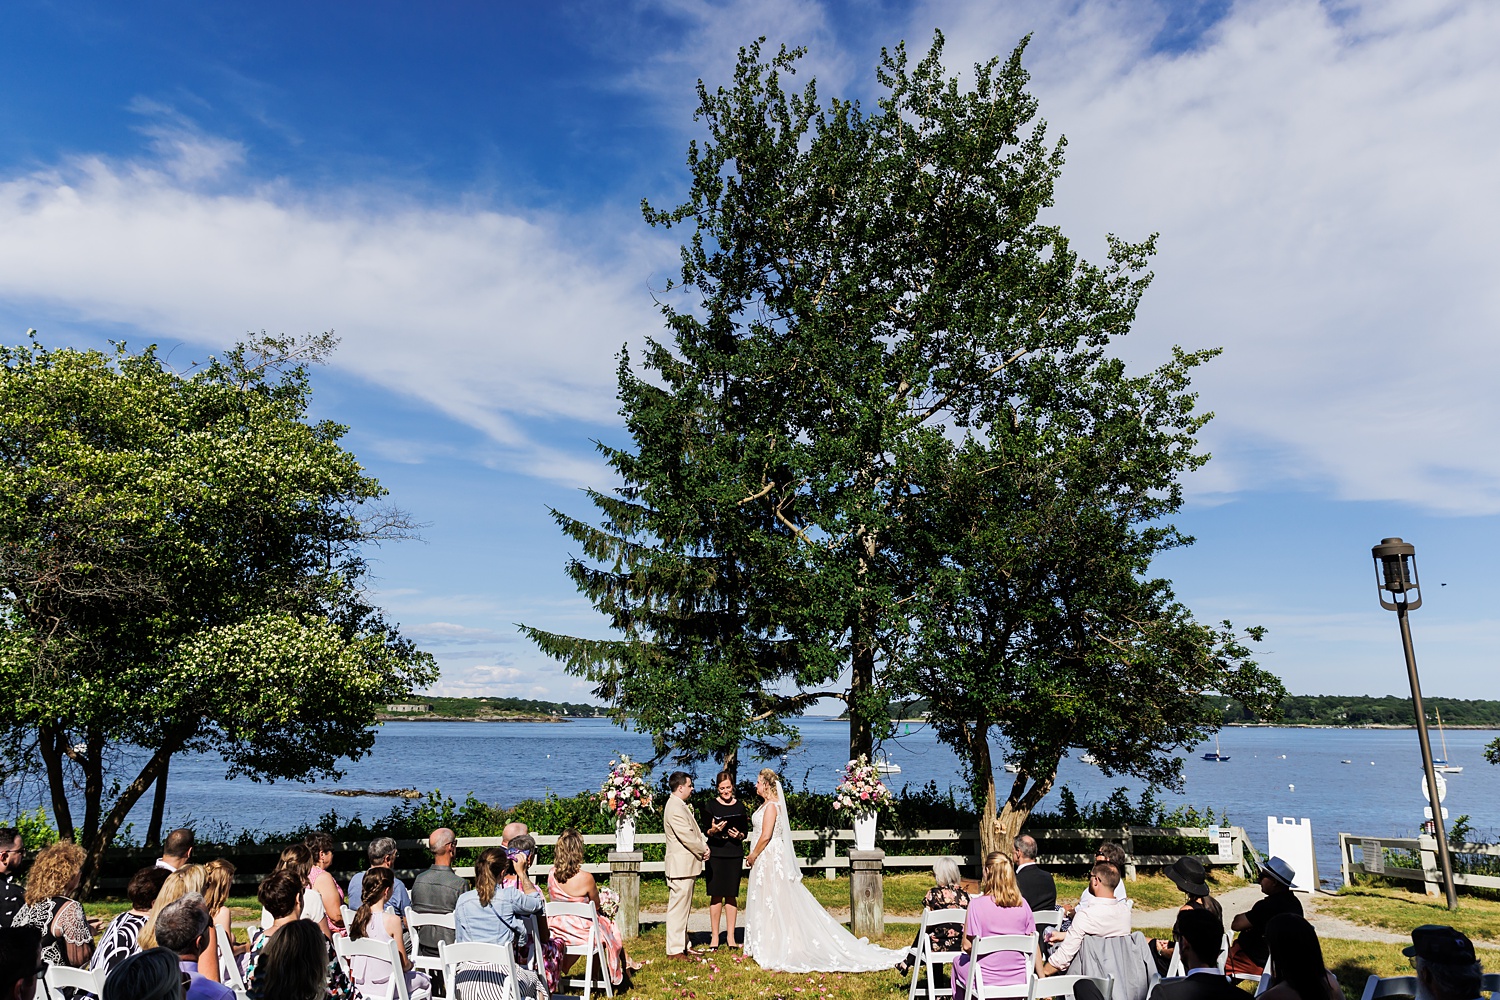 The wedding ceremony location next to Willard Beach at SMCC in South Portland Maine